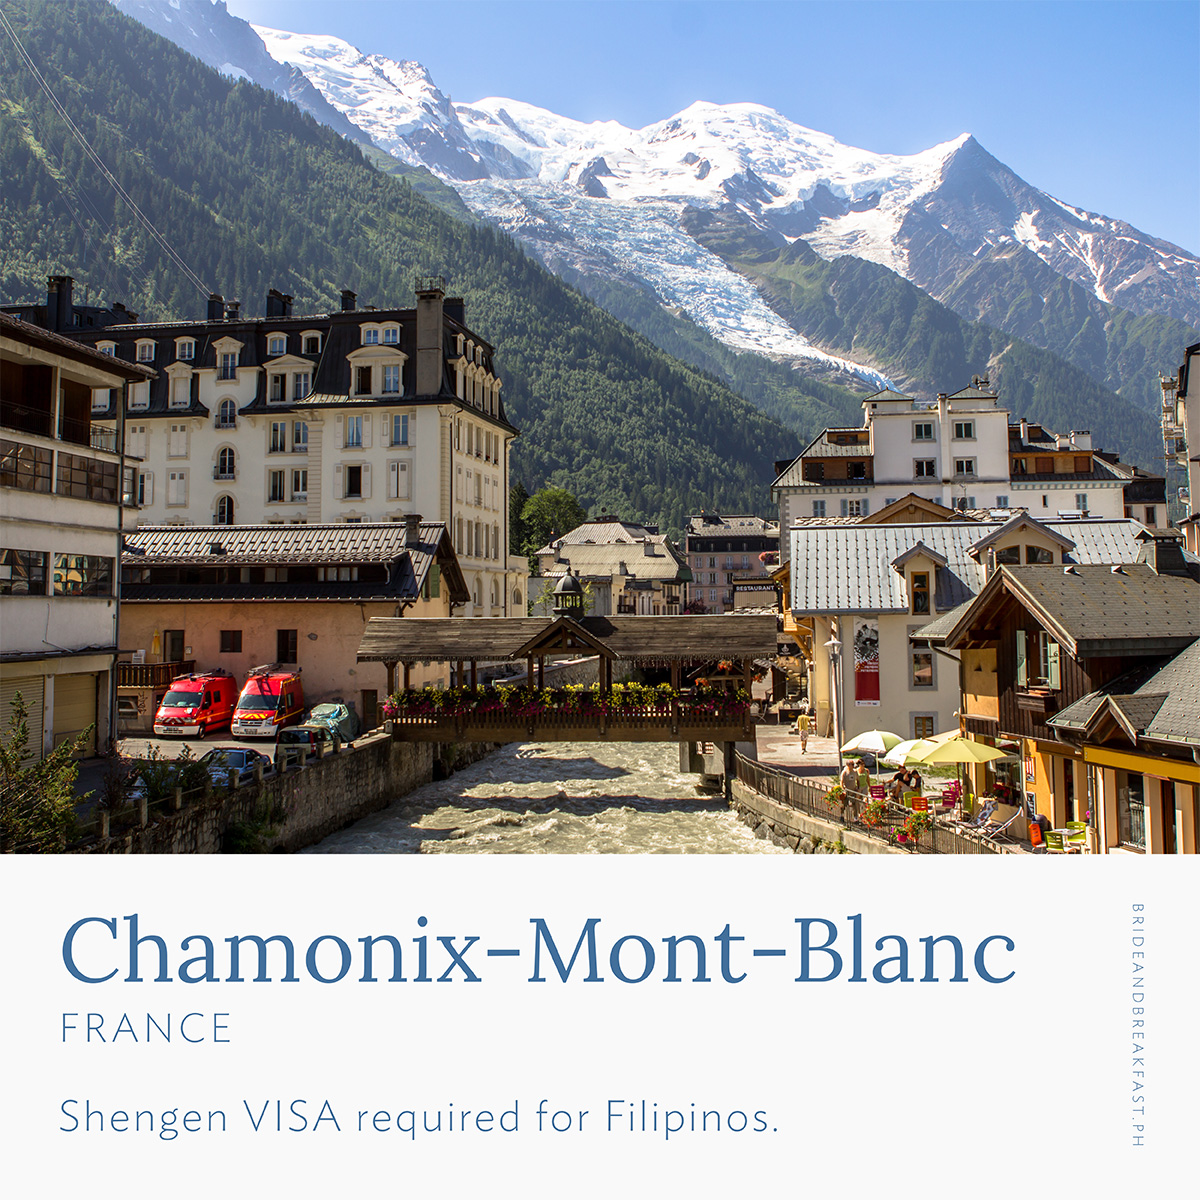 CHAMONIX-MONT-BLANC, FRANCE Visa Requirement: Shengen Visa required for Filipinos.